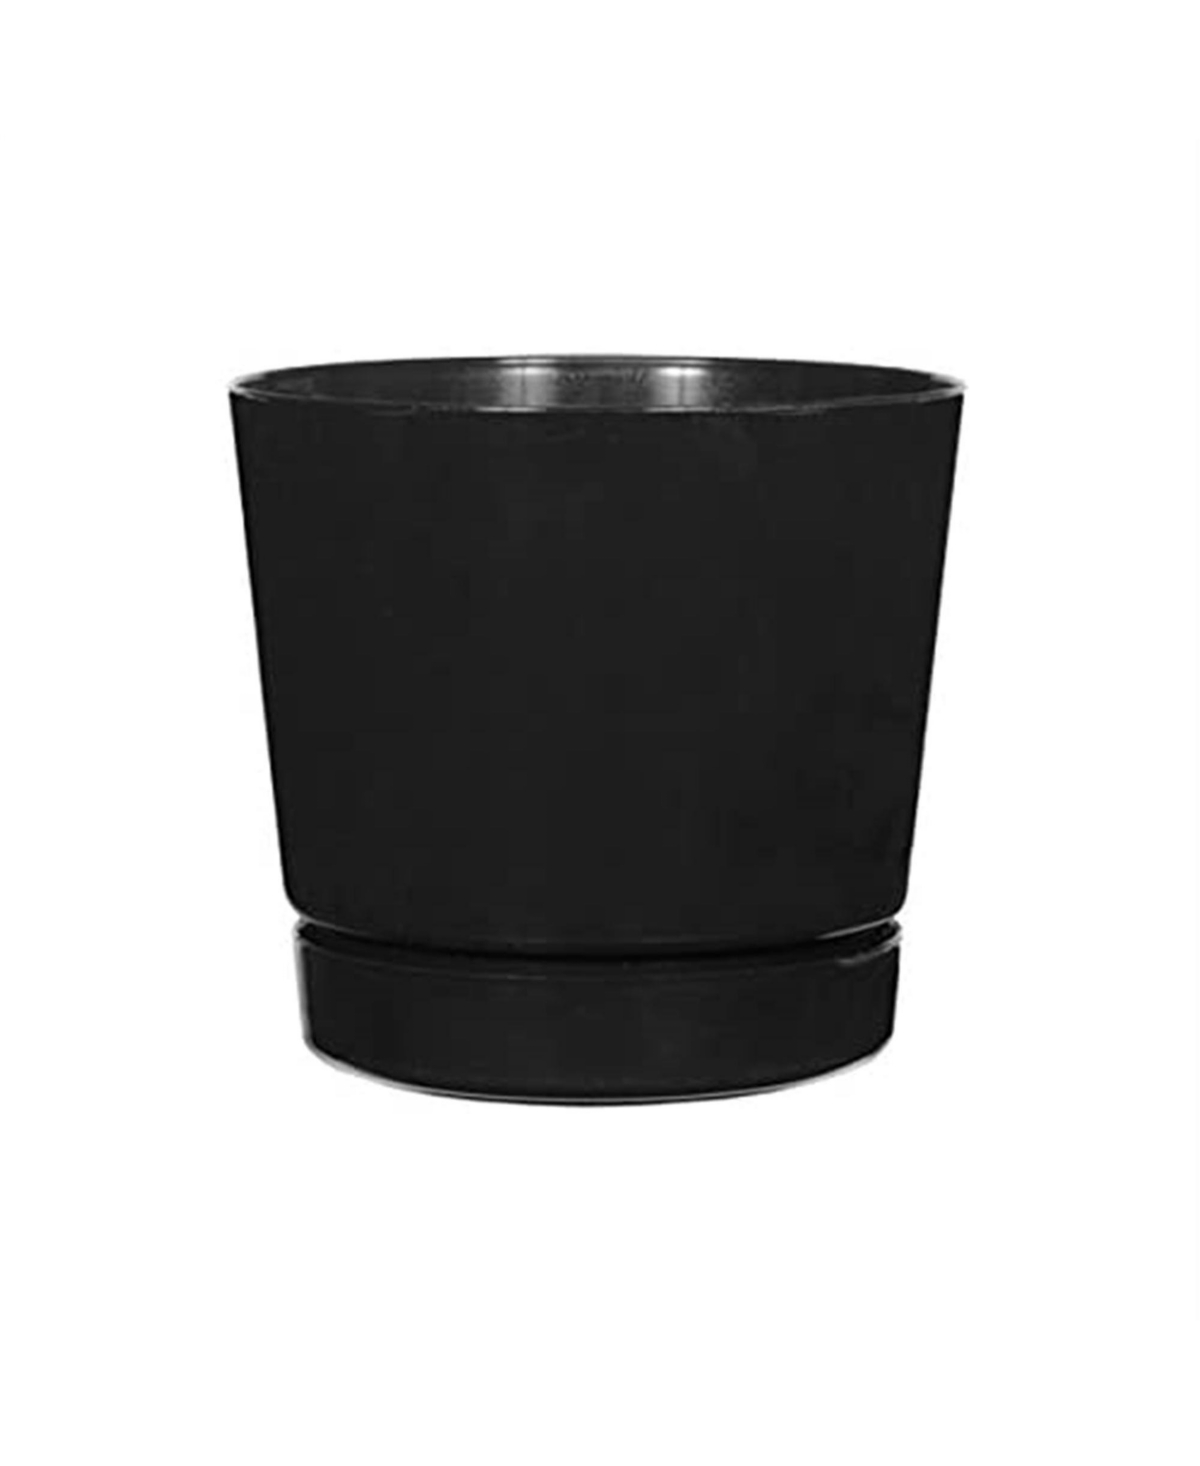 Full Depth Round Cylinder Black Pot, 8 inch - Black